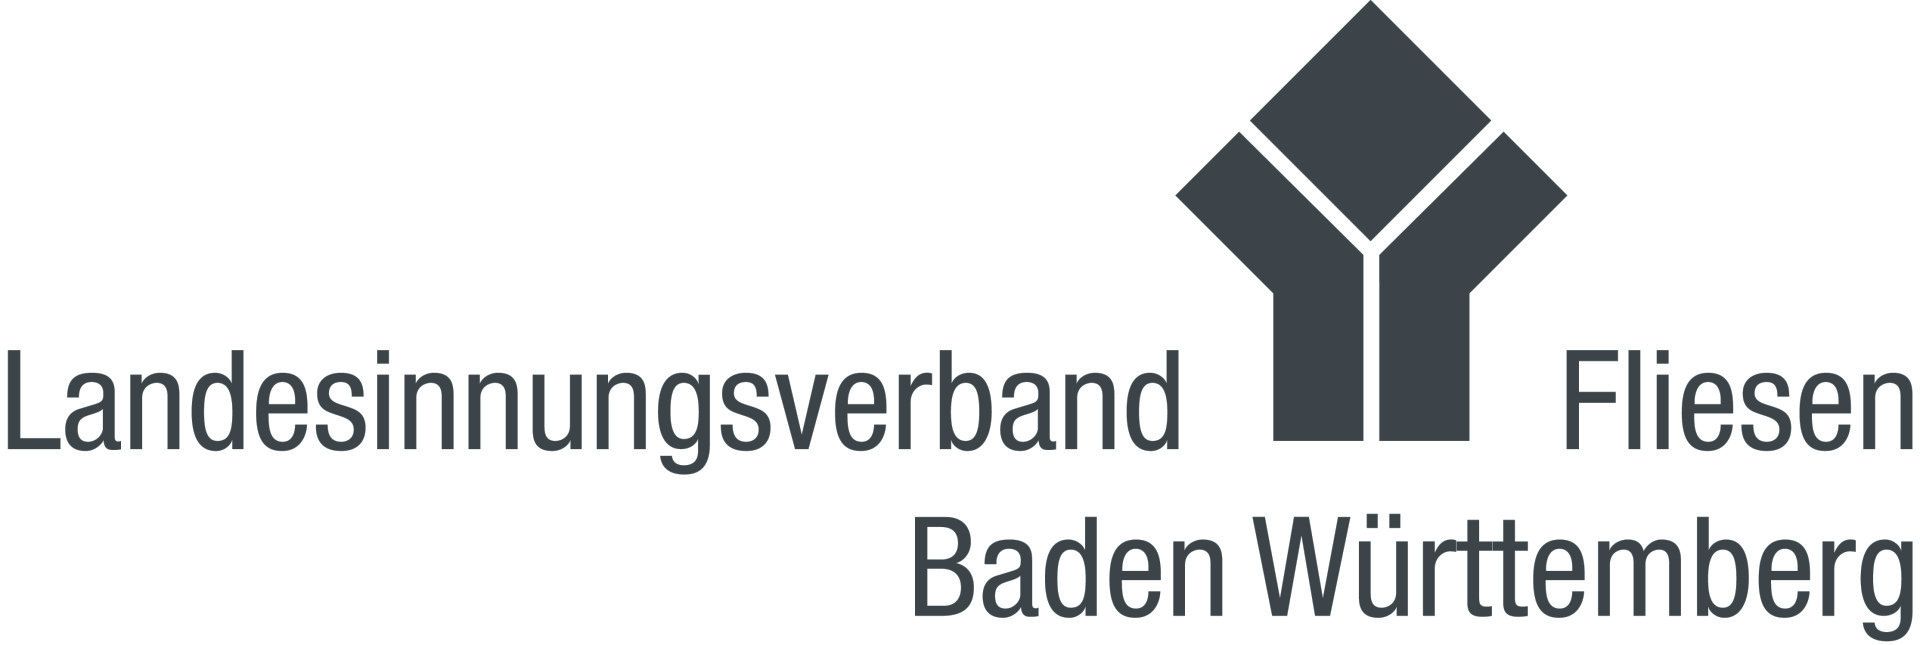 Landesinnungsverband Fliesen Baden Württemberg